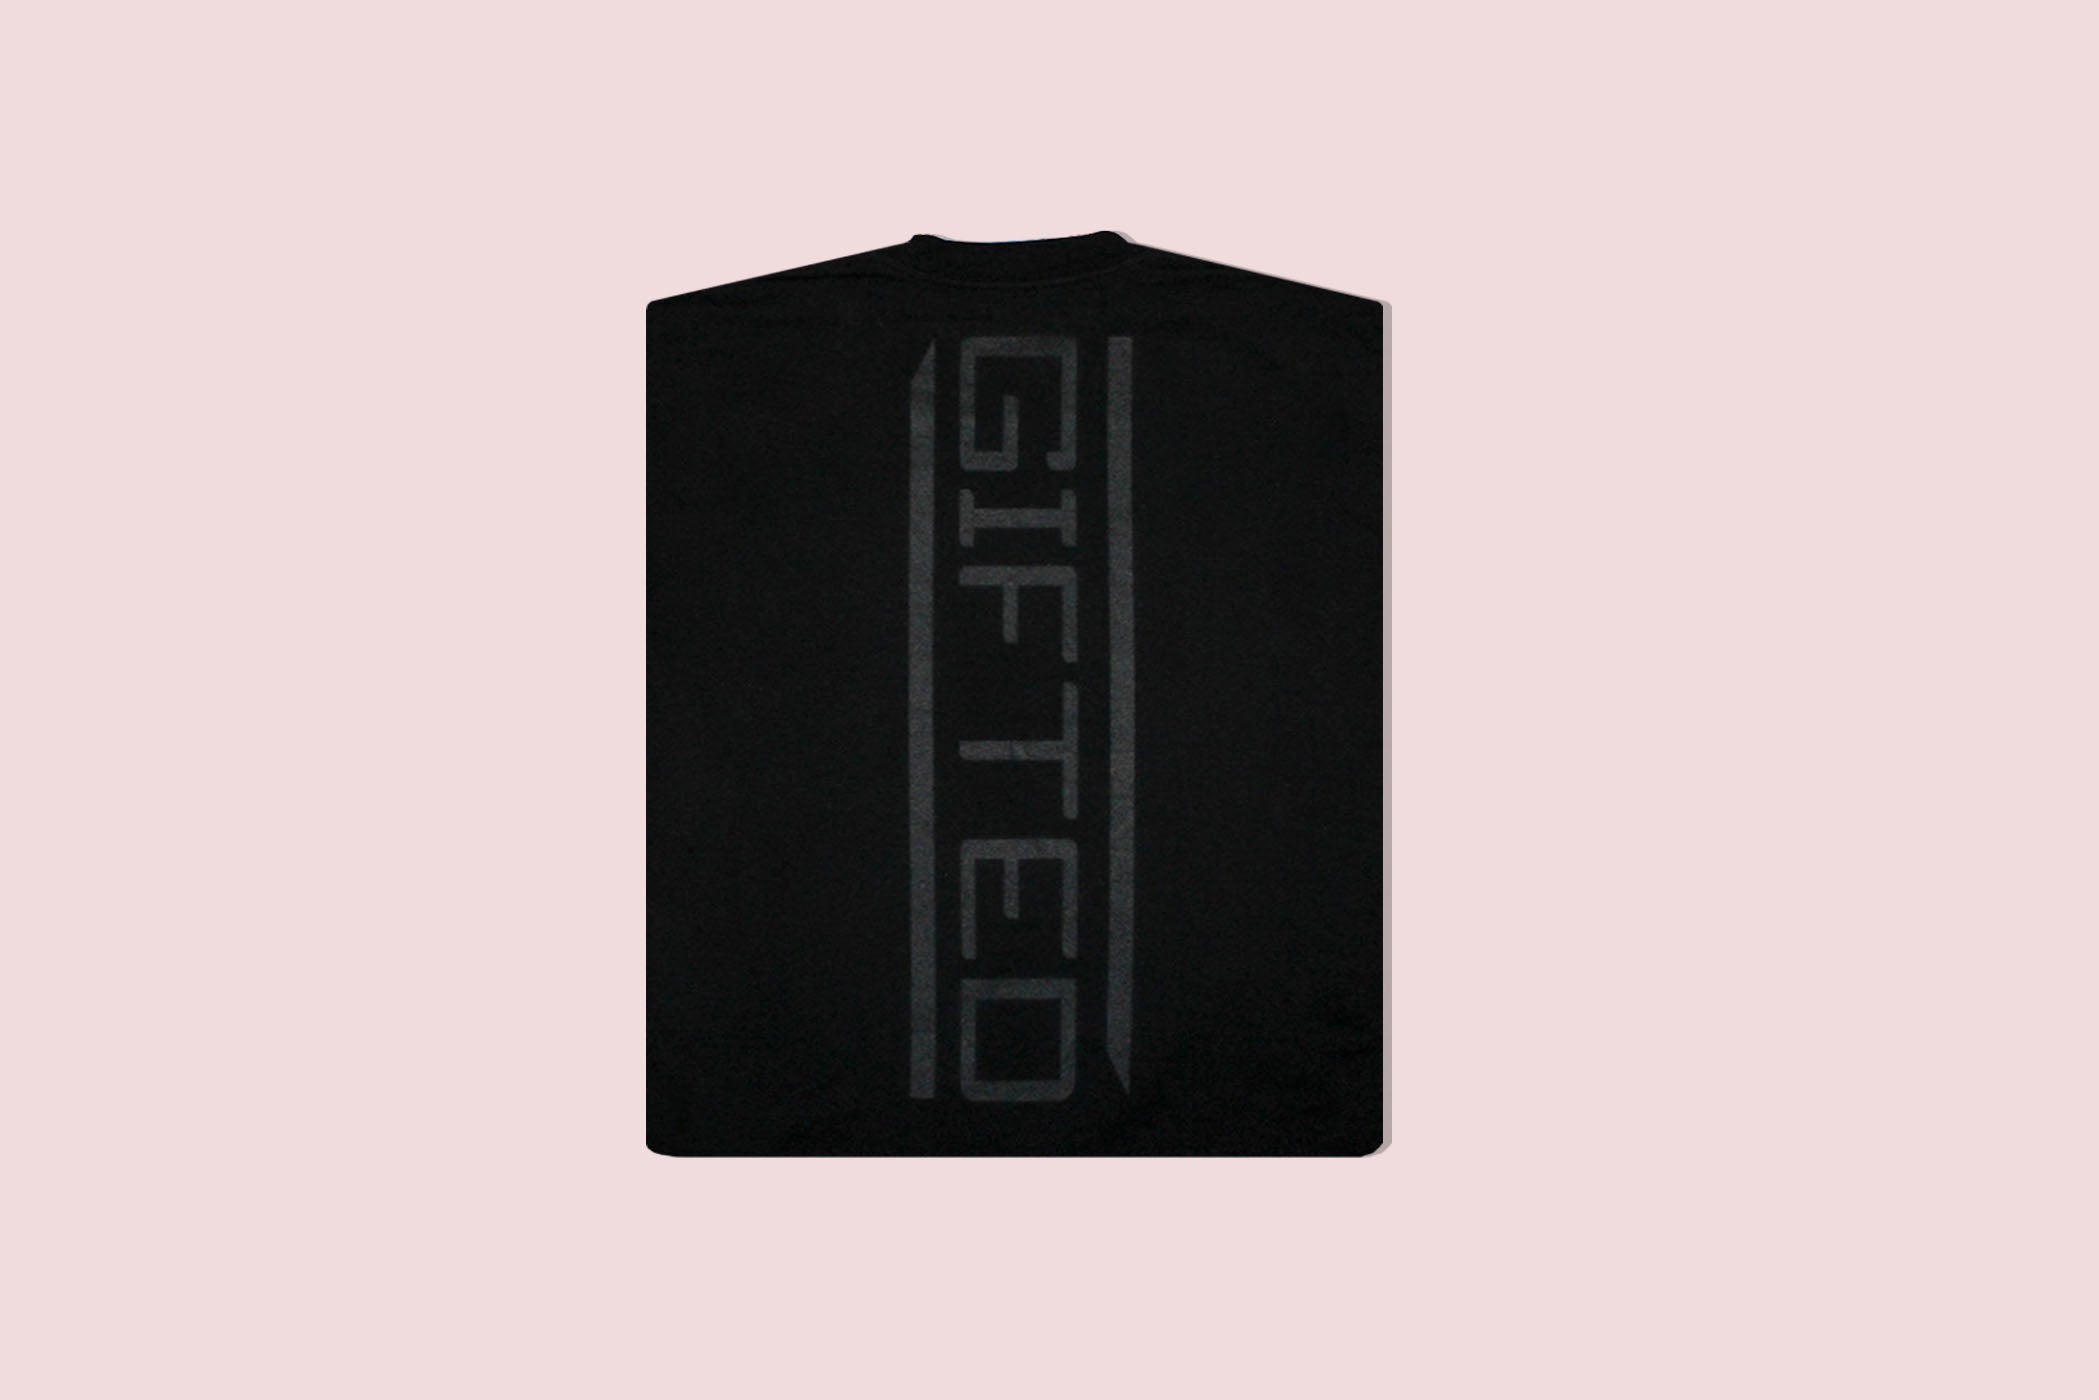 Gifted Core Long Sleeve Tee - Black